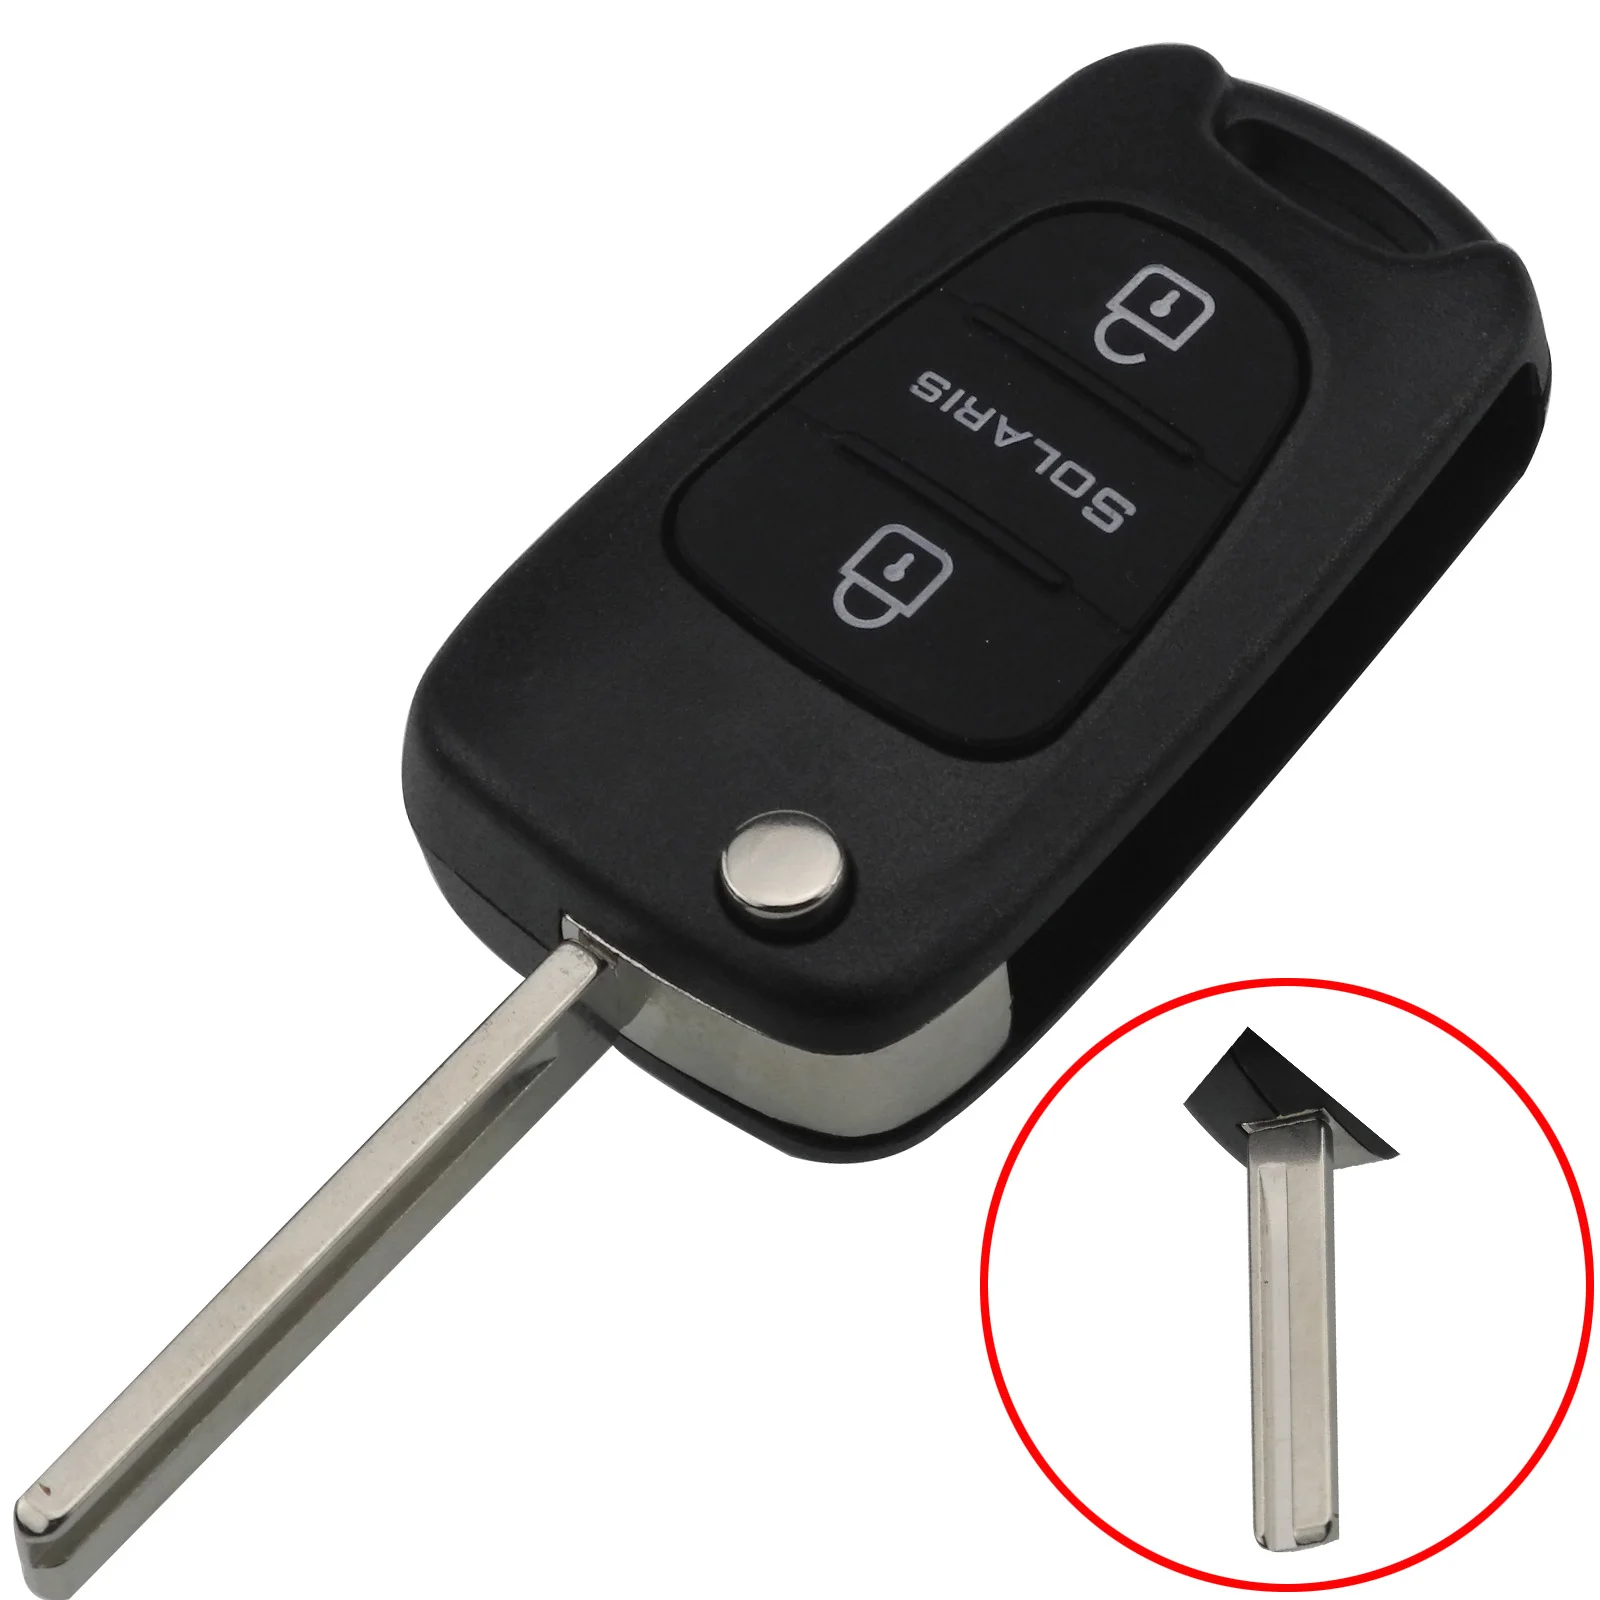 Jingyuqin Uncut Blade 3 кнопки откидная оболочка ключа дистанционного управления для HYUNDAI I30 IX35 для Kia K2 K5 ключи автомобиля пустой чехол - Цвет: solaris right blade